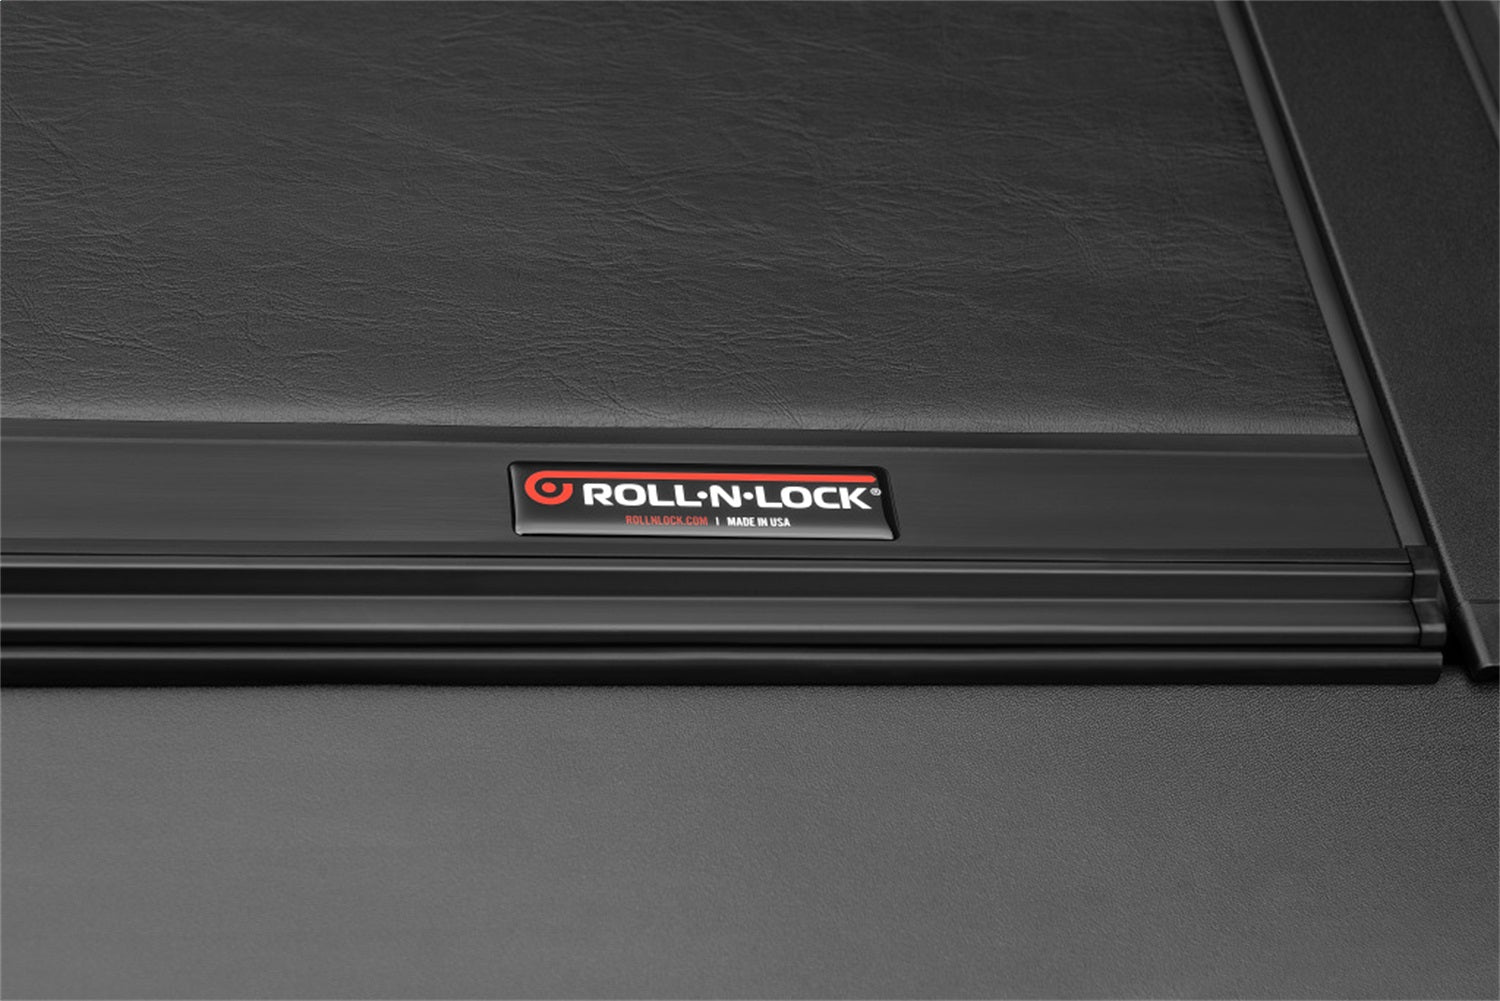 Roll-N-Lock LG402M Roll-N-Lock M-Series Truck Bed Cover Fits 1500 2500 3500